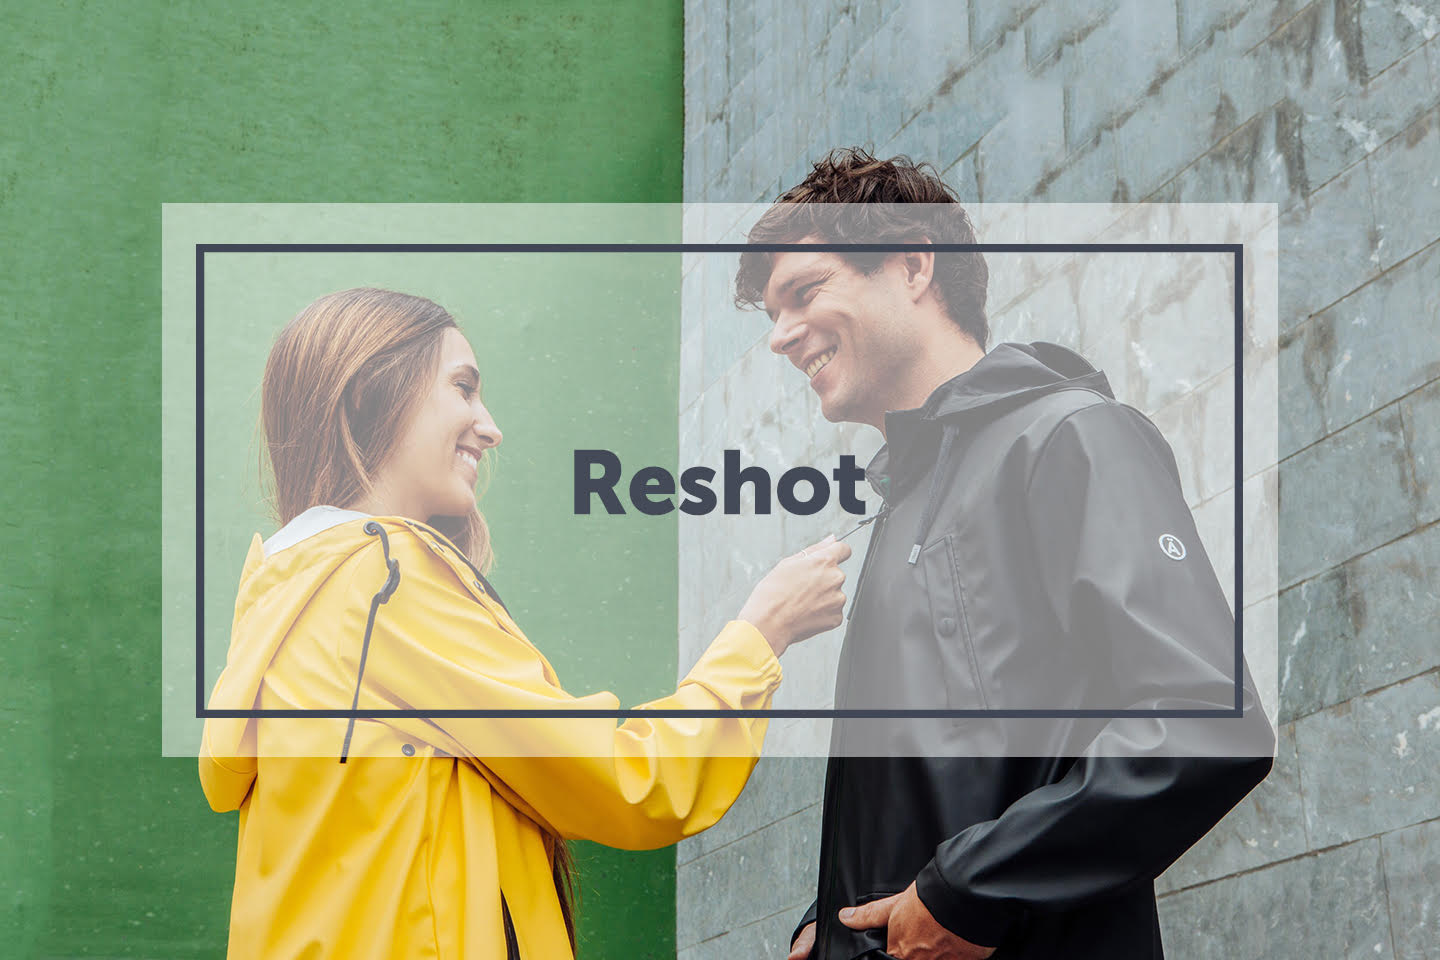 Reshot free stock photos